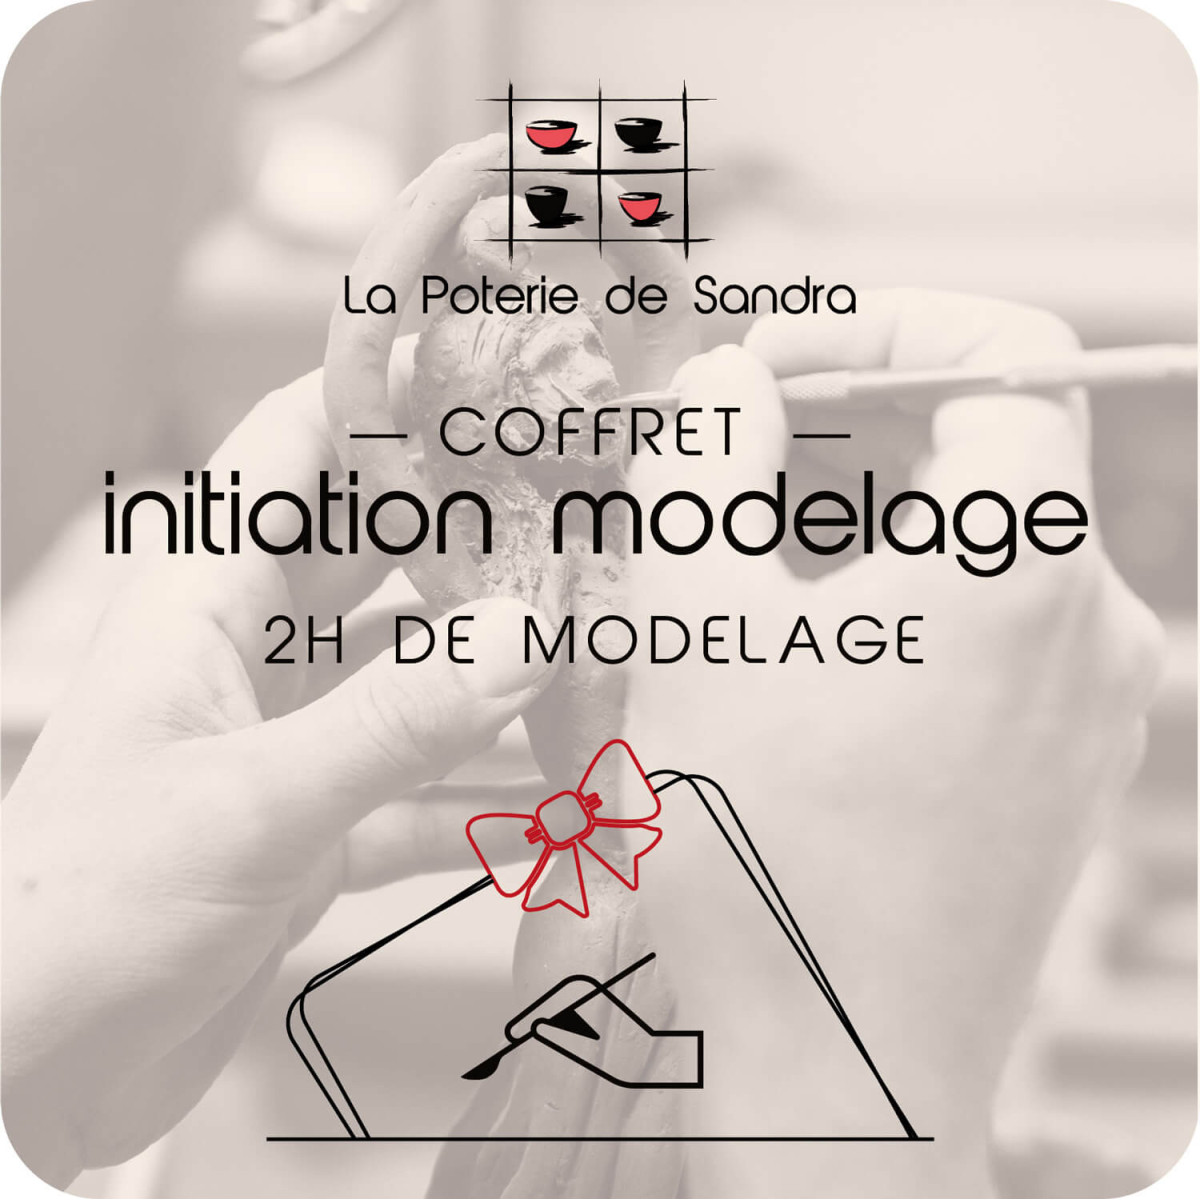 Coffret initiation modelage - La poterie de Sandra & Co